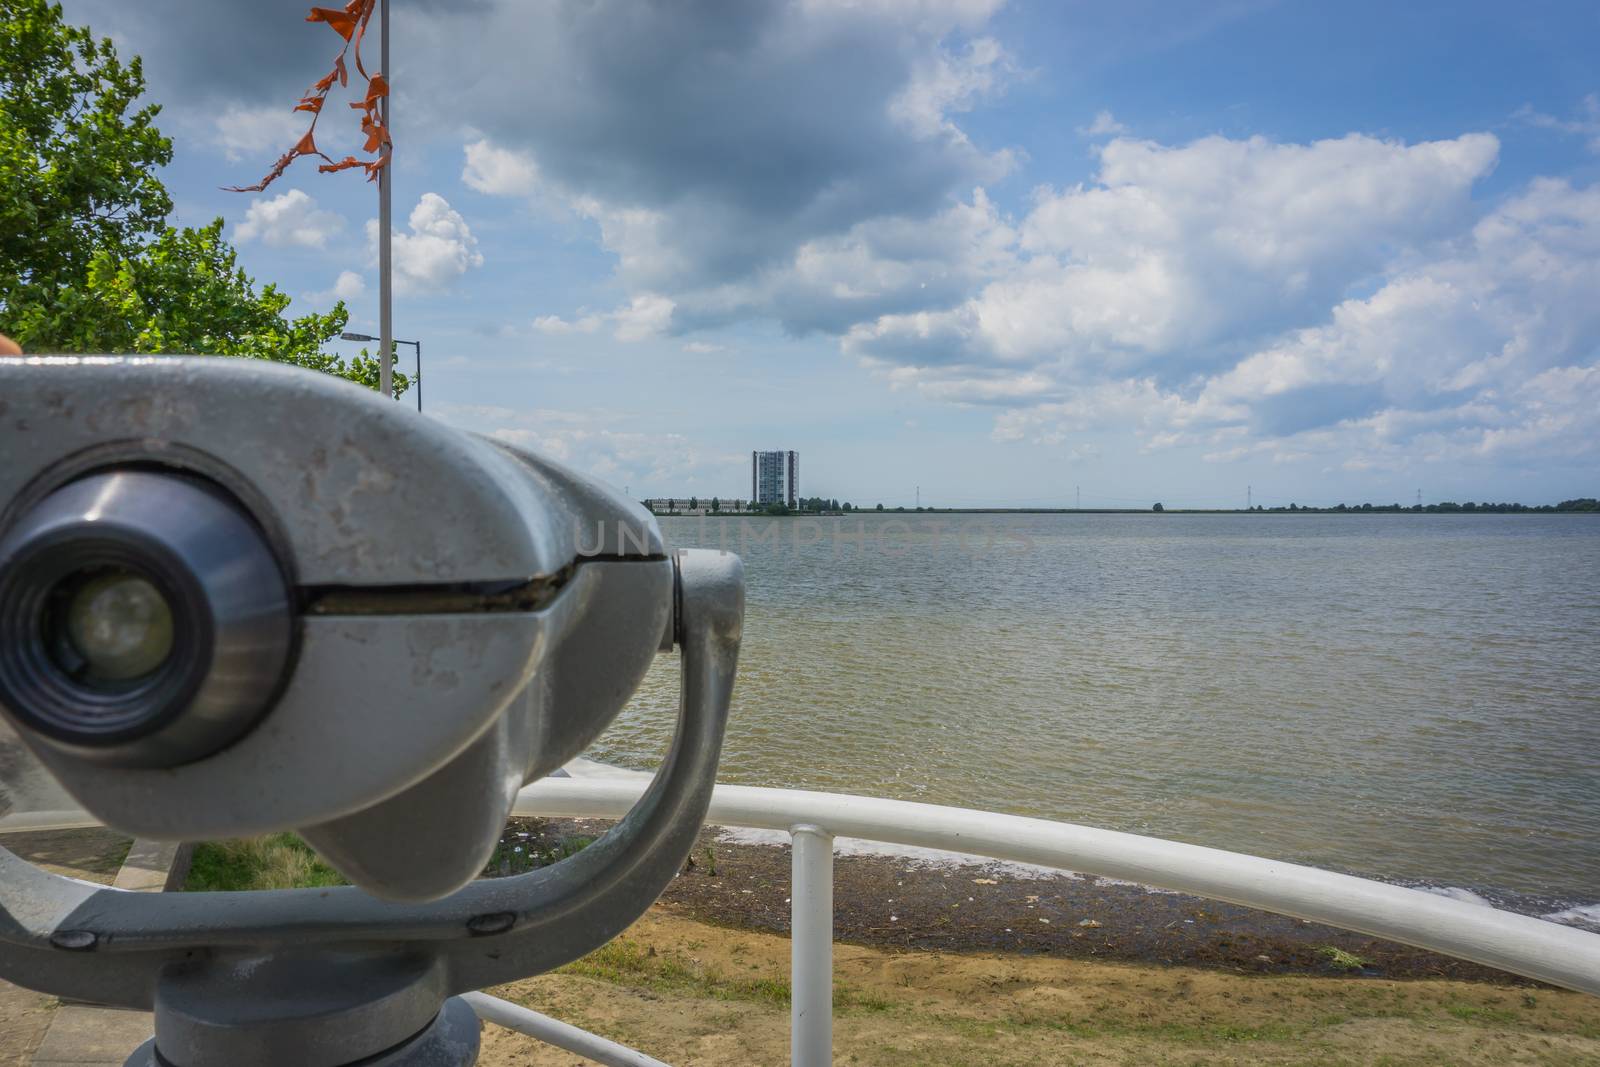 watch tower with binoculars at the city beach lake view by charlottebleijenberg